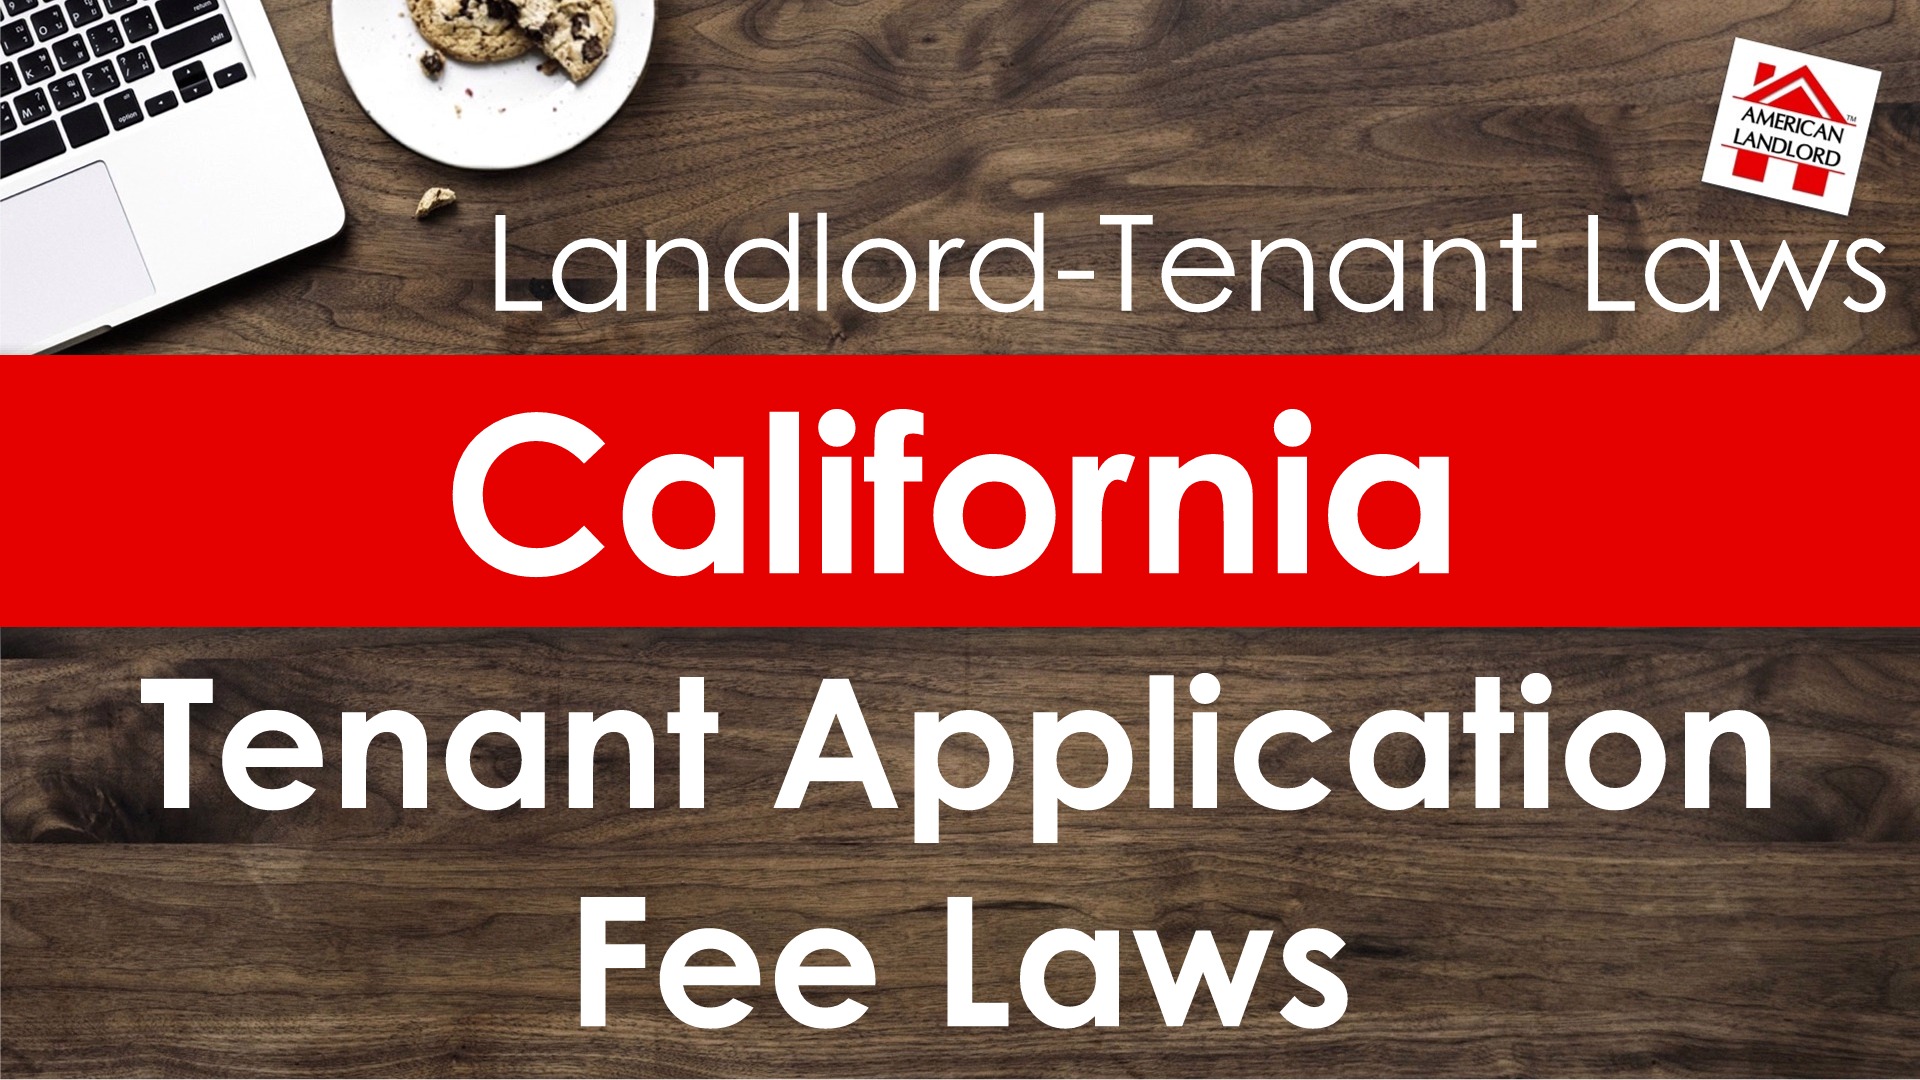 California Tenant Application Screening Fee Laws American Landlord